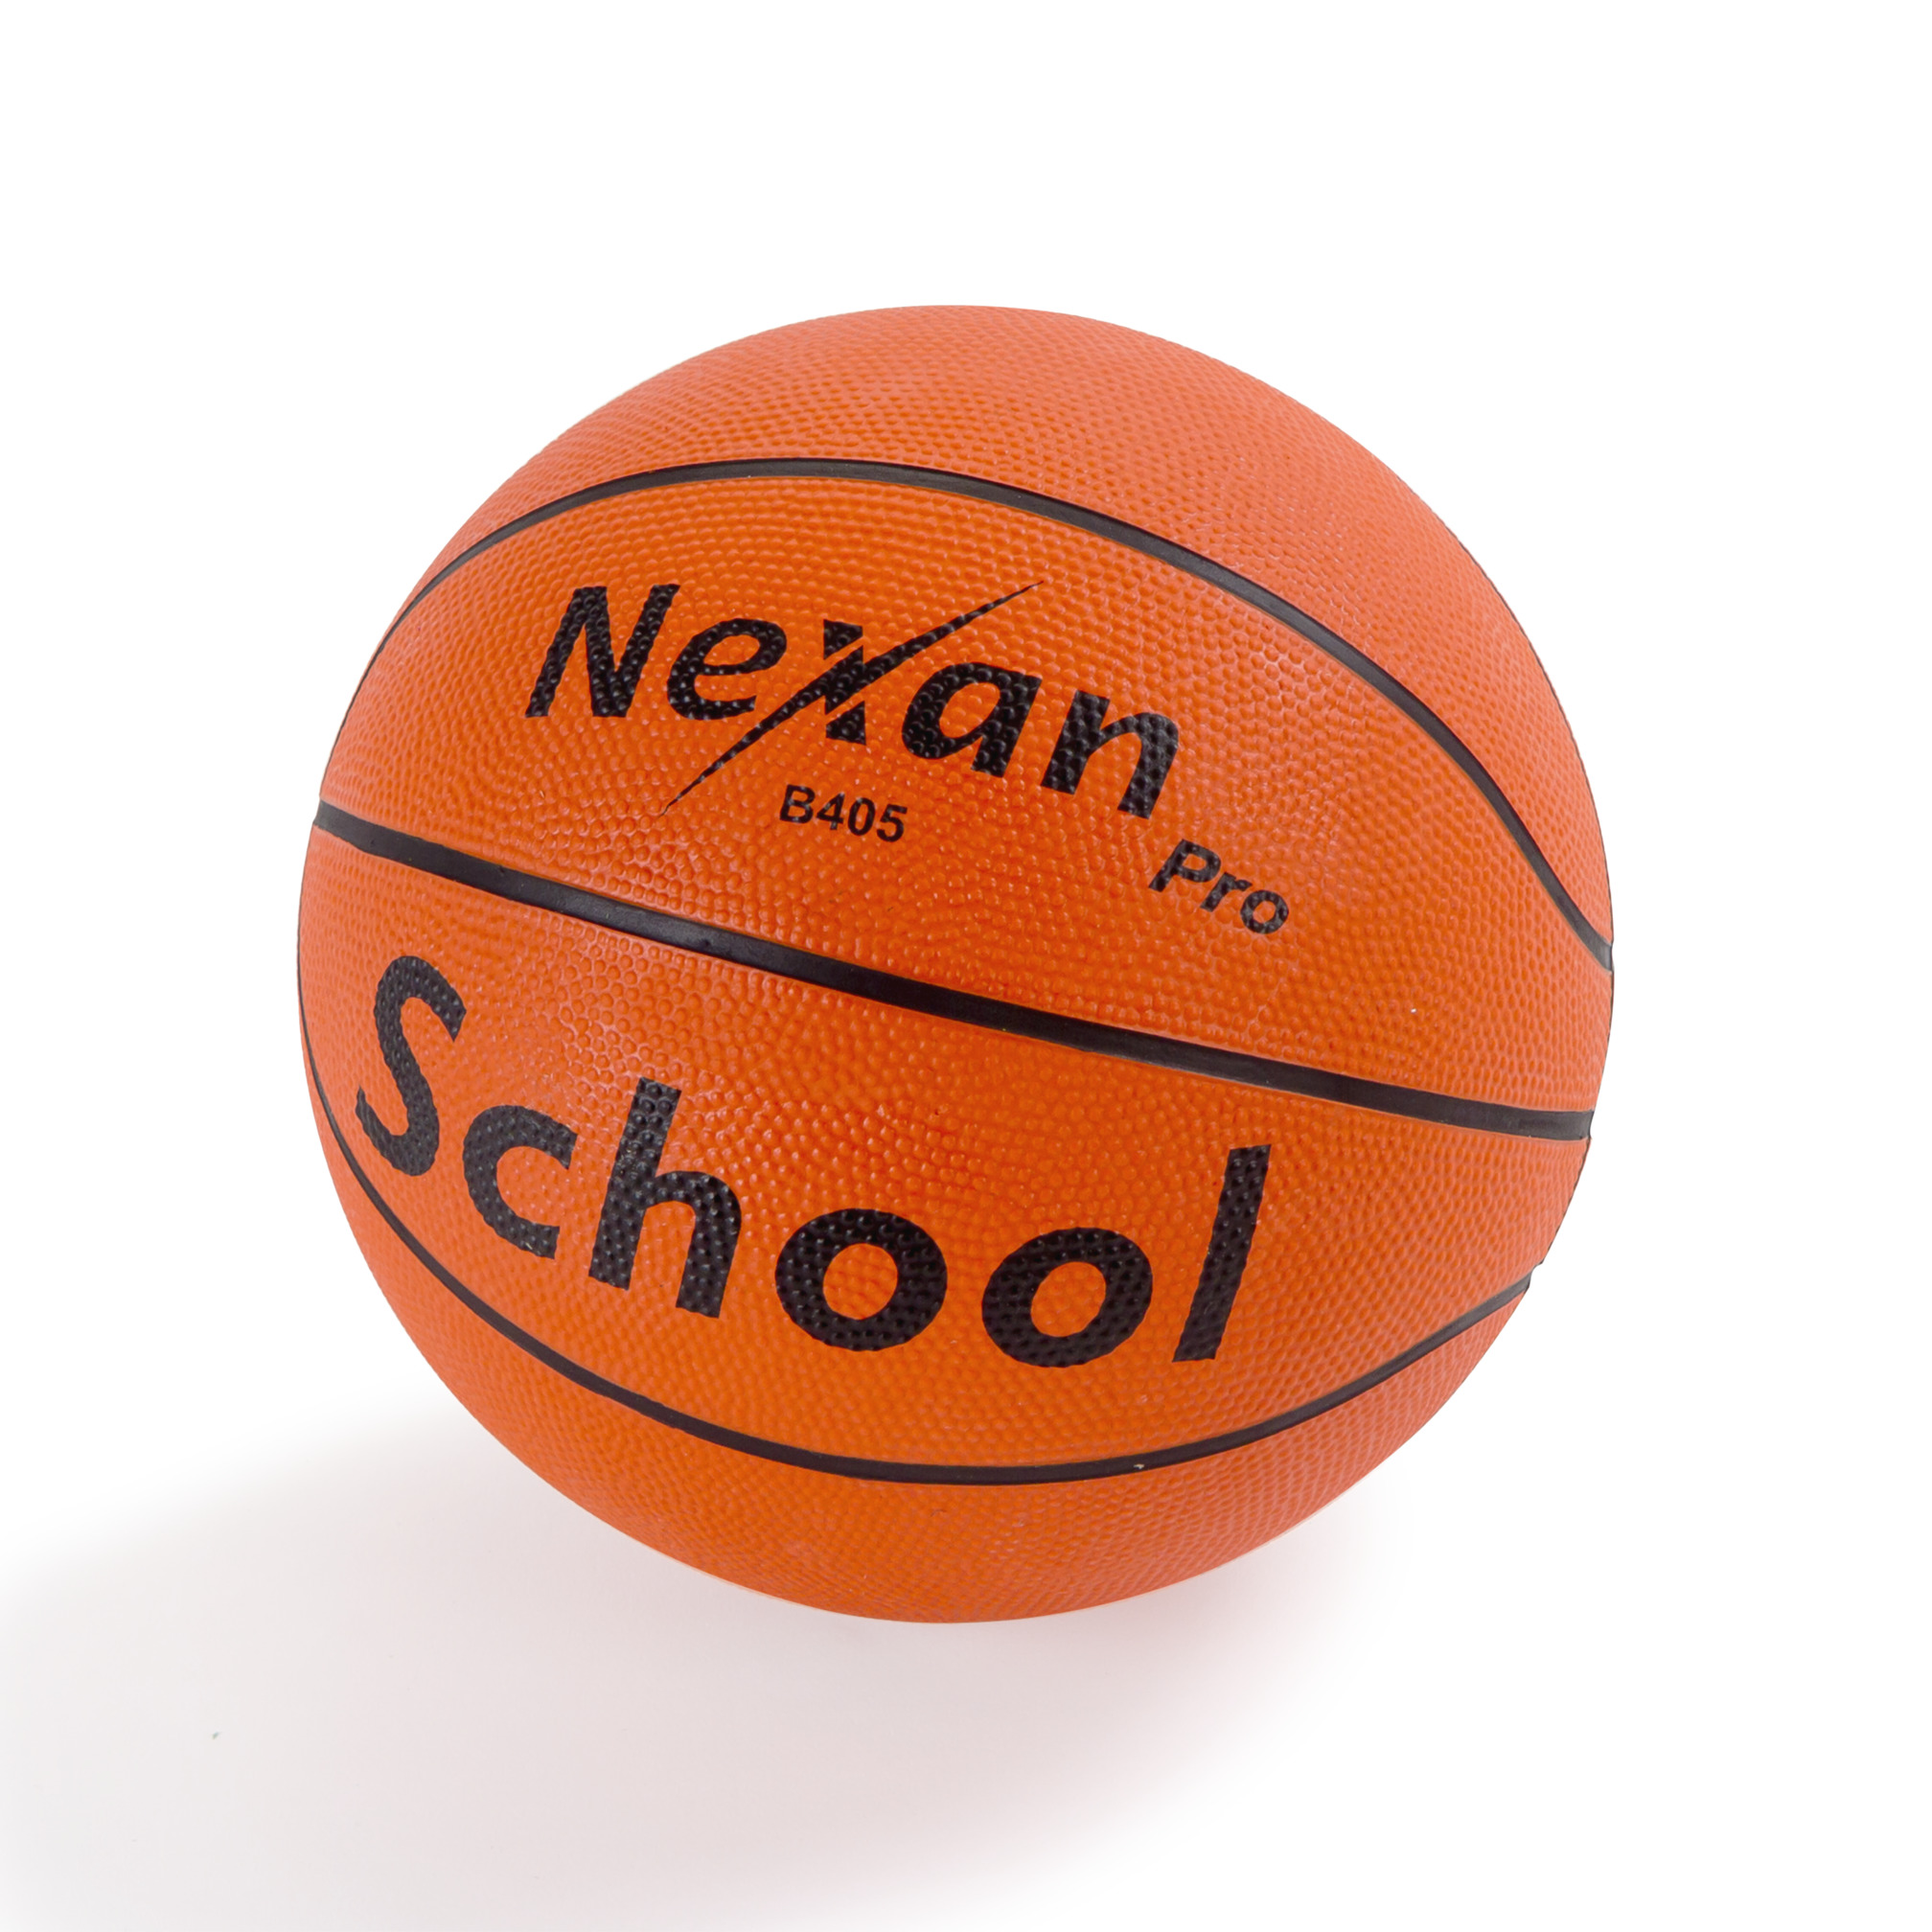 Nexan Basketball SCHOOL, Größe 5